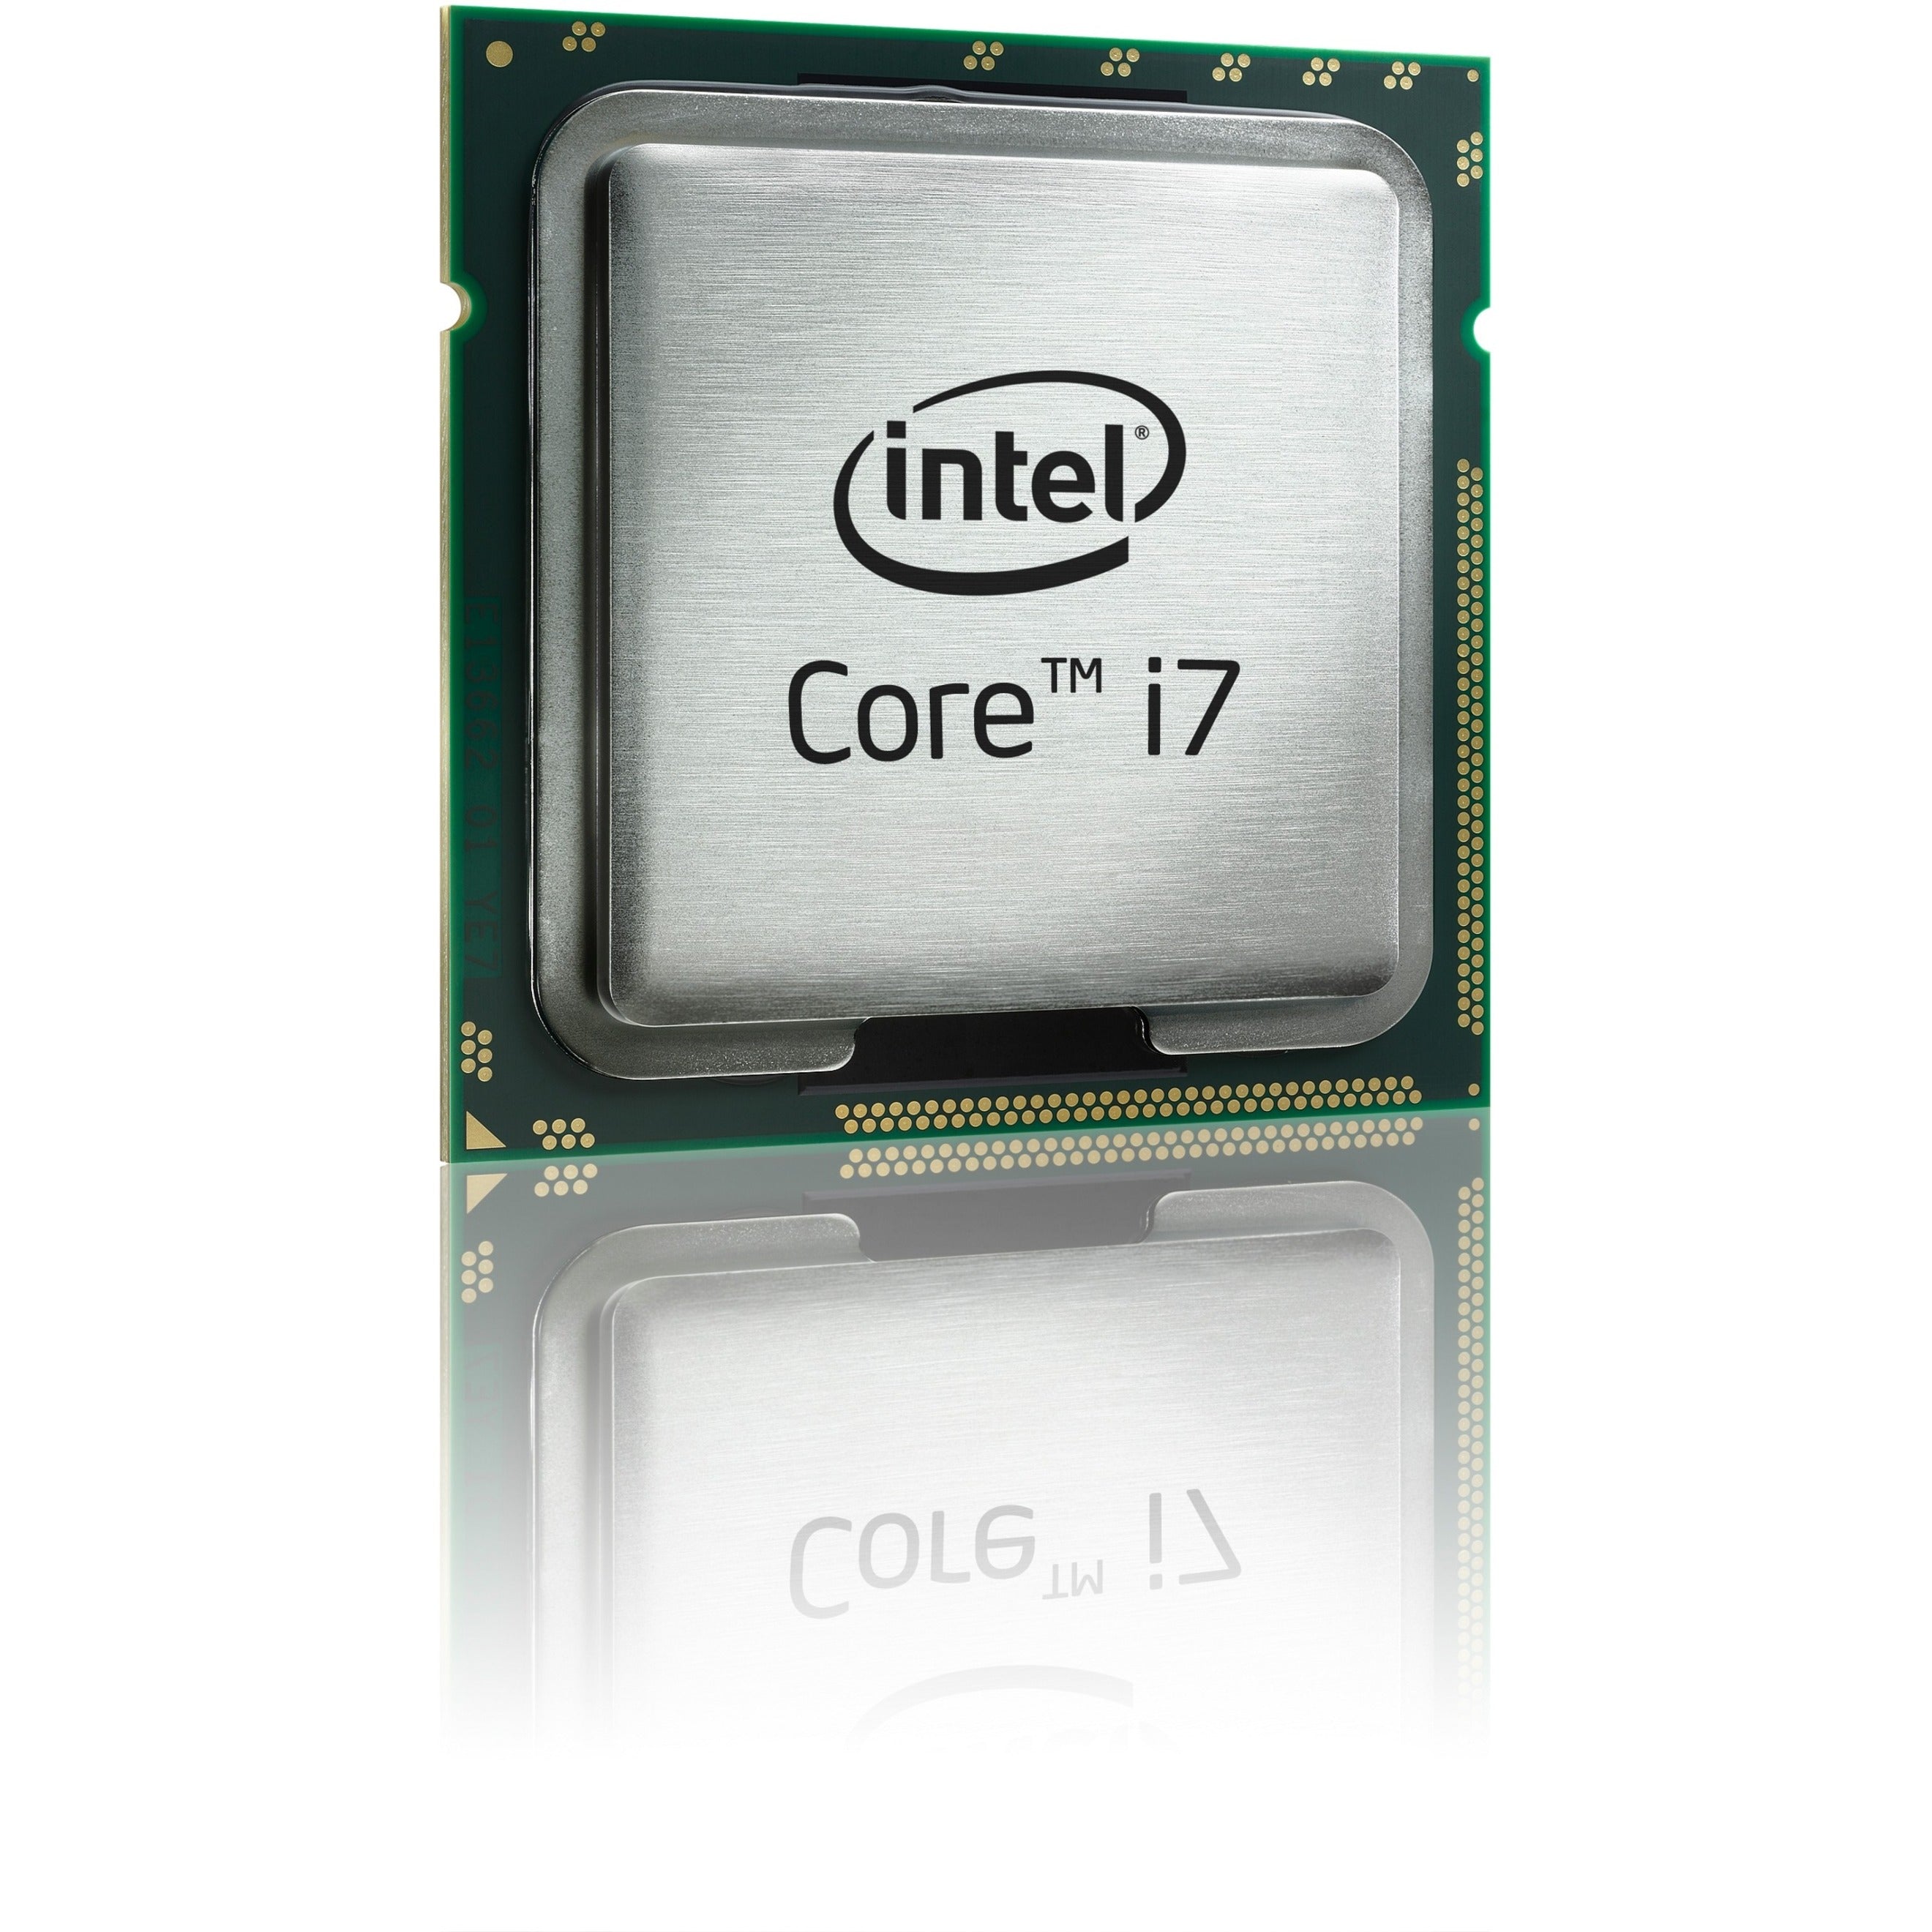 Intel CM8064601561014 Core i7-4790S Quad-core i7-4790S 3.2GHz Desktop Processor, 8MB Cache, 65W Thermal Design Power